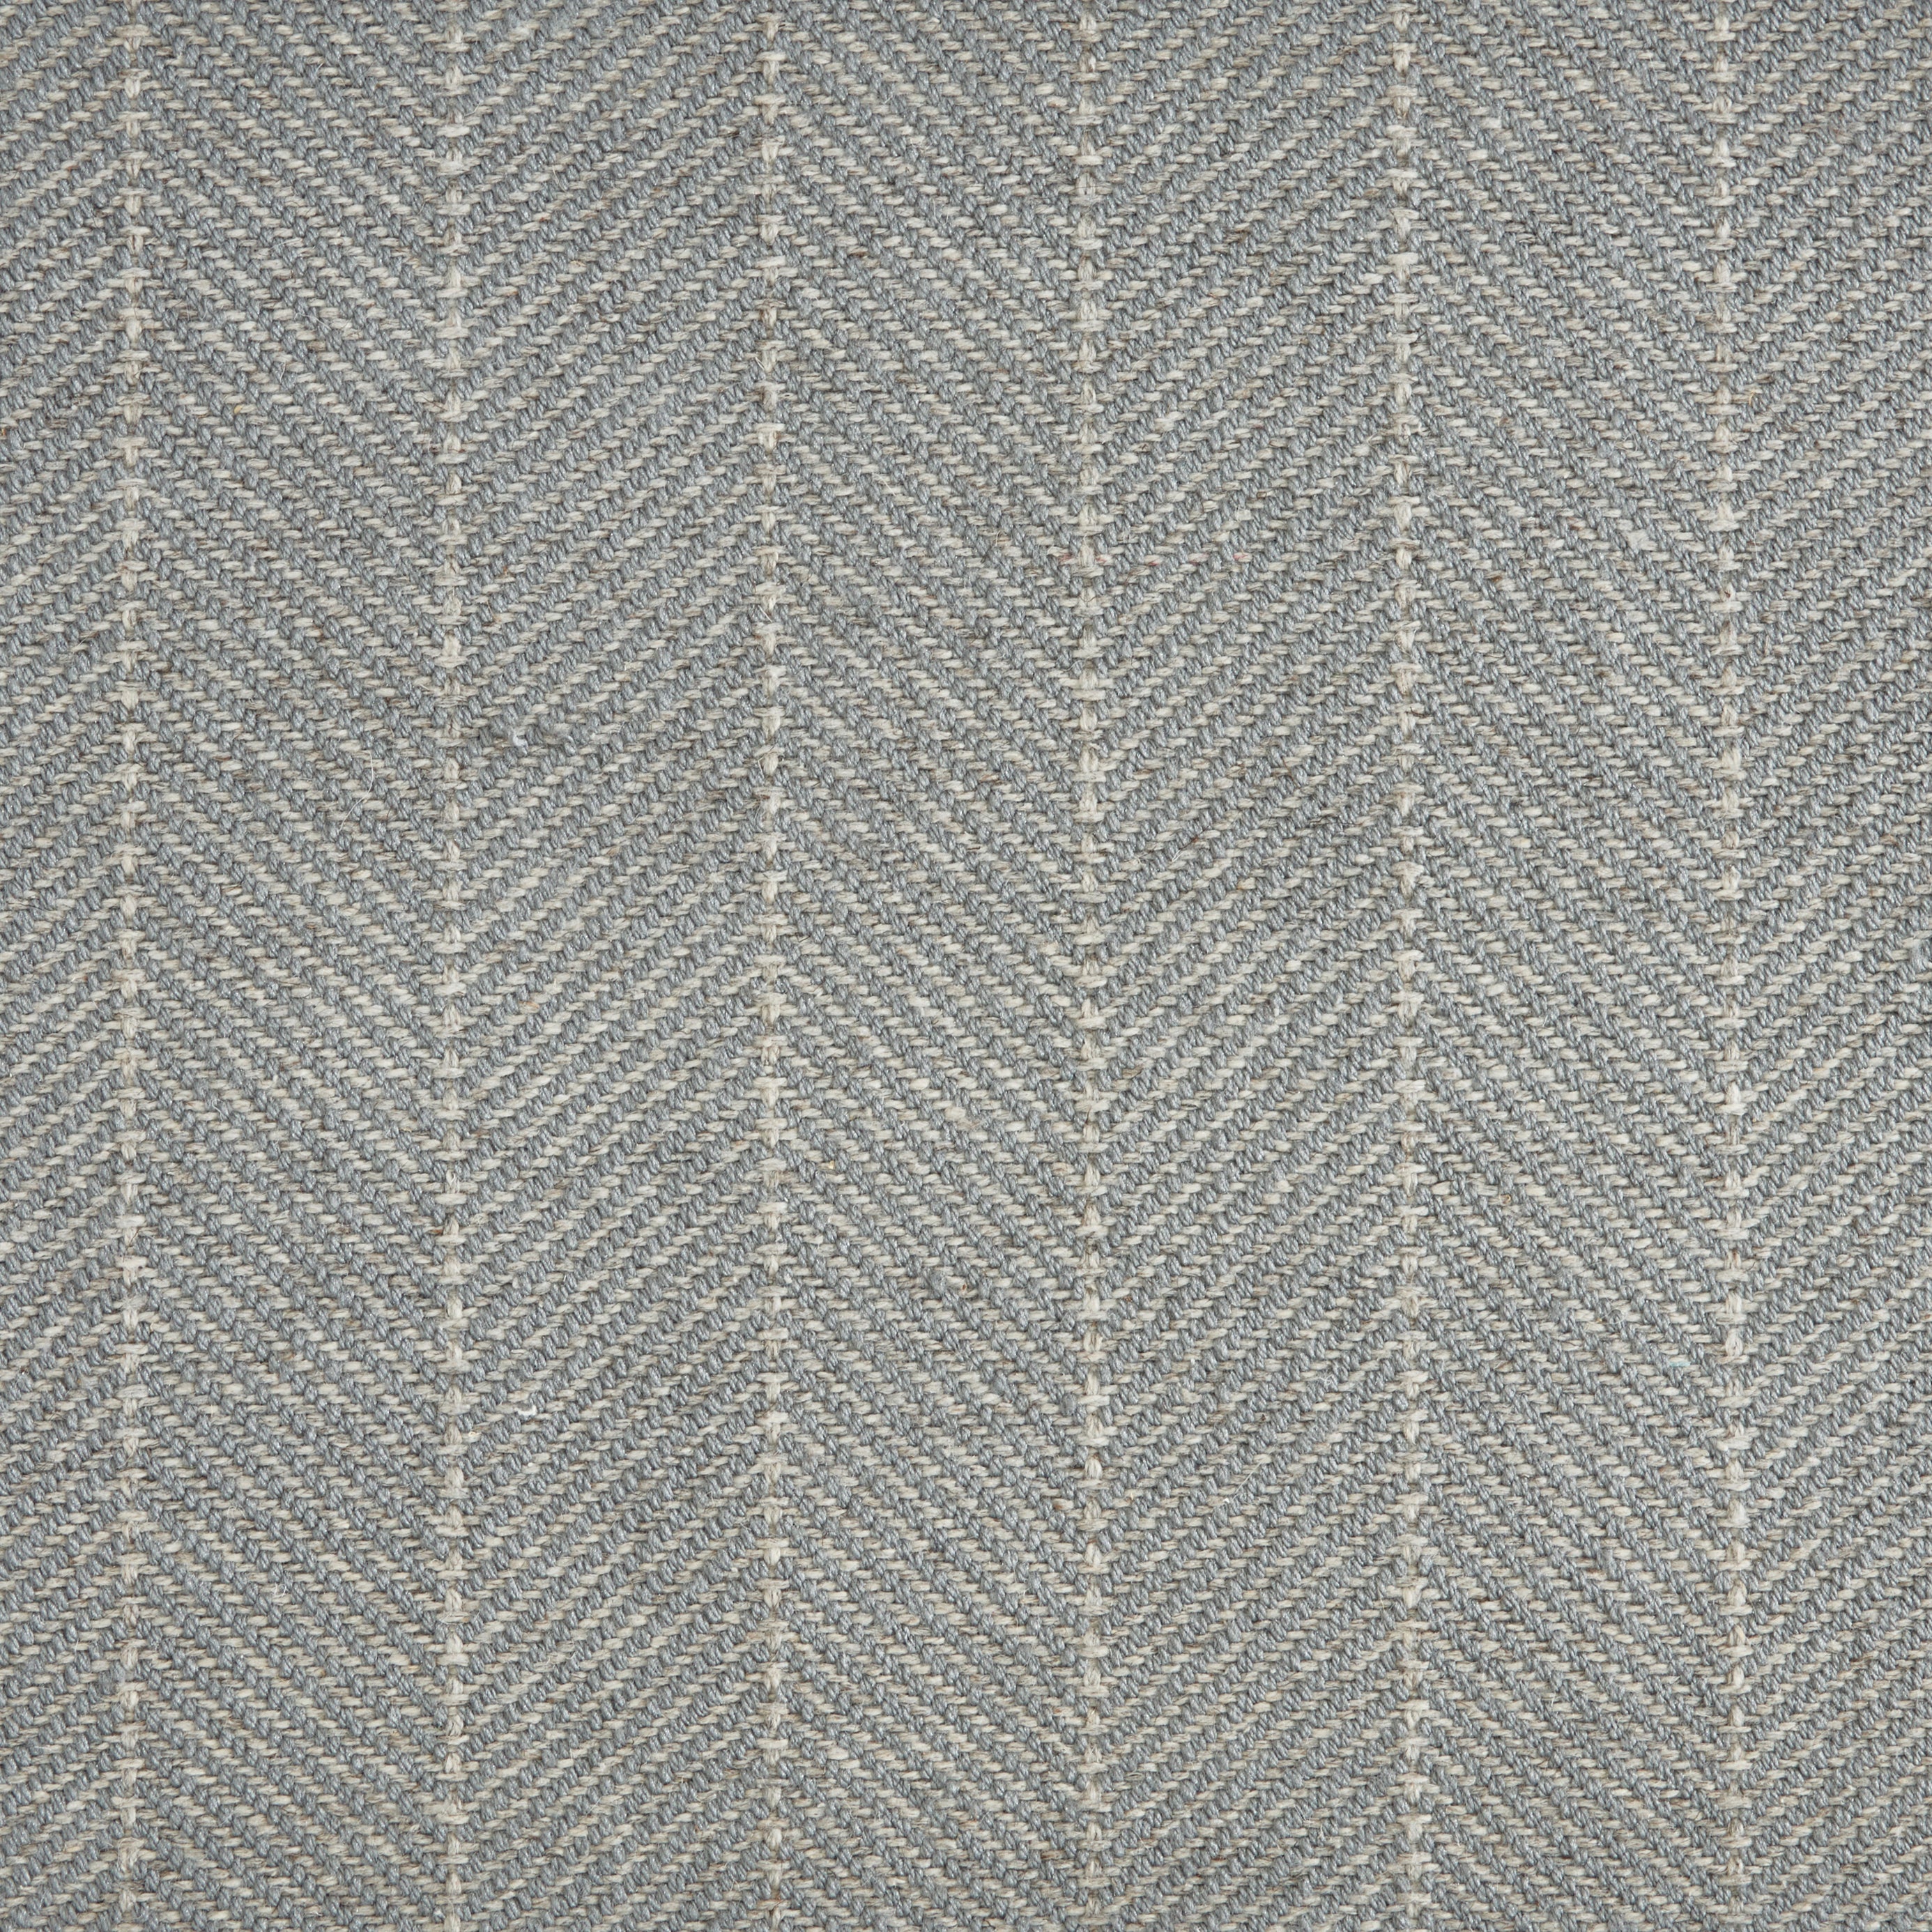 Wool-polysilk broadloom carpet swatch in a chevron stripe pattern in blue-gray and gray.